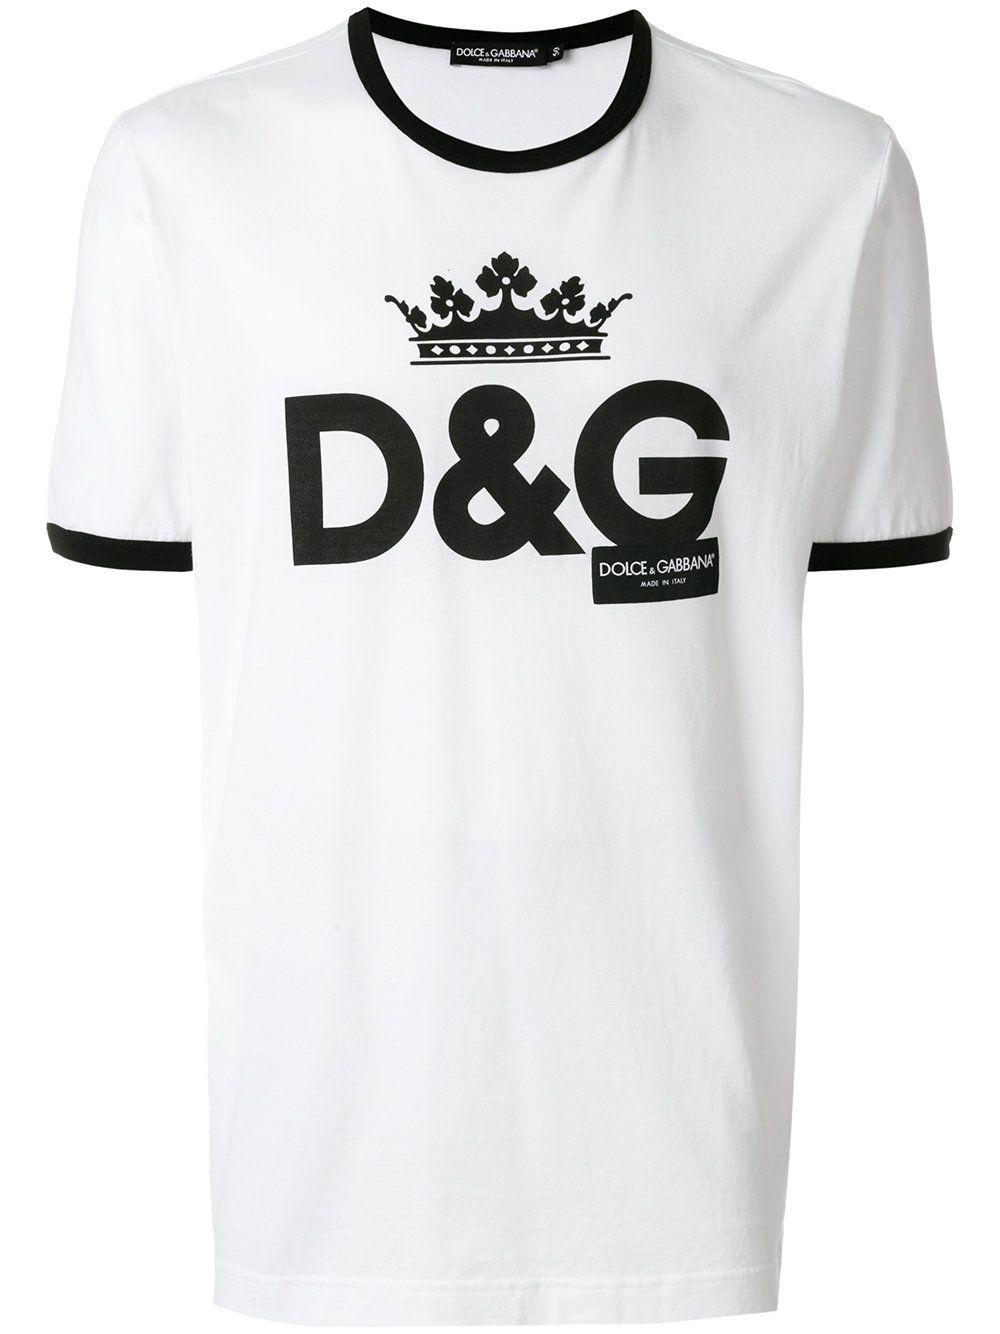 Dolce & Gabbana Logo - Dolce Gabbana Crown D&G Logo T-Shirt G8HV0T.HP706 - HWI40 WHITE ...